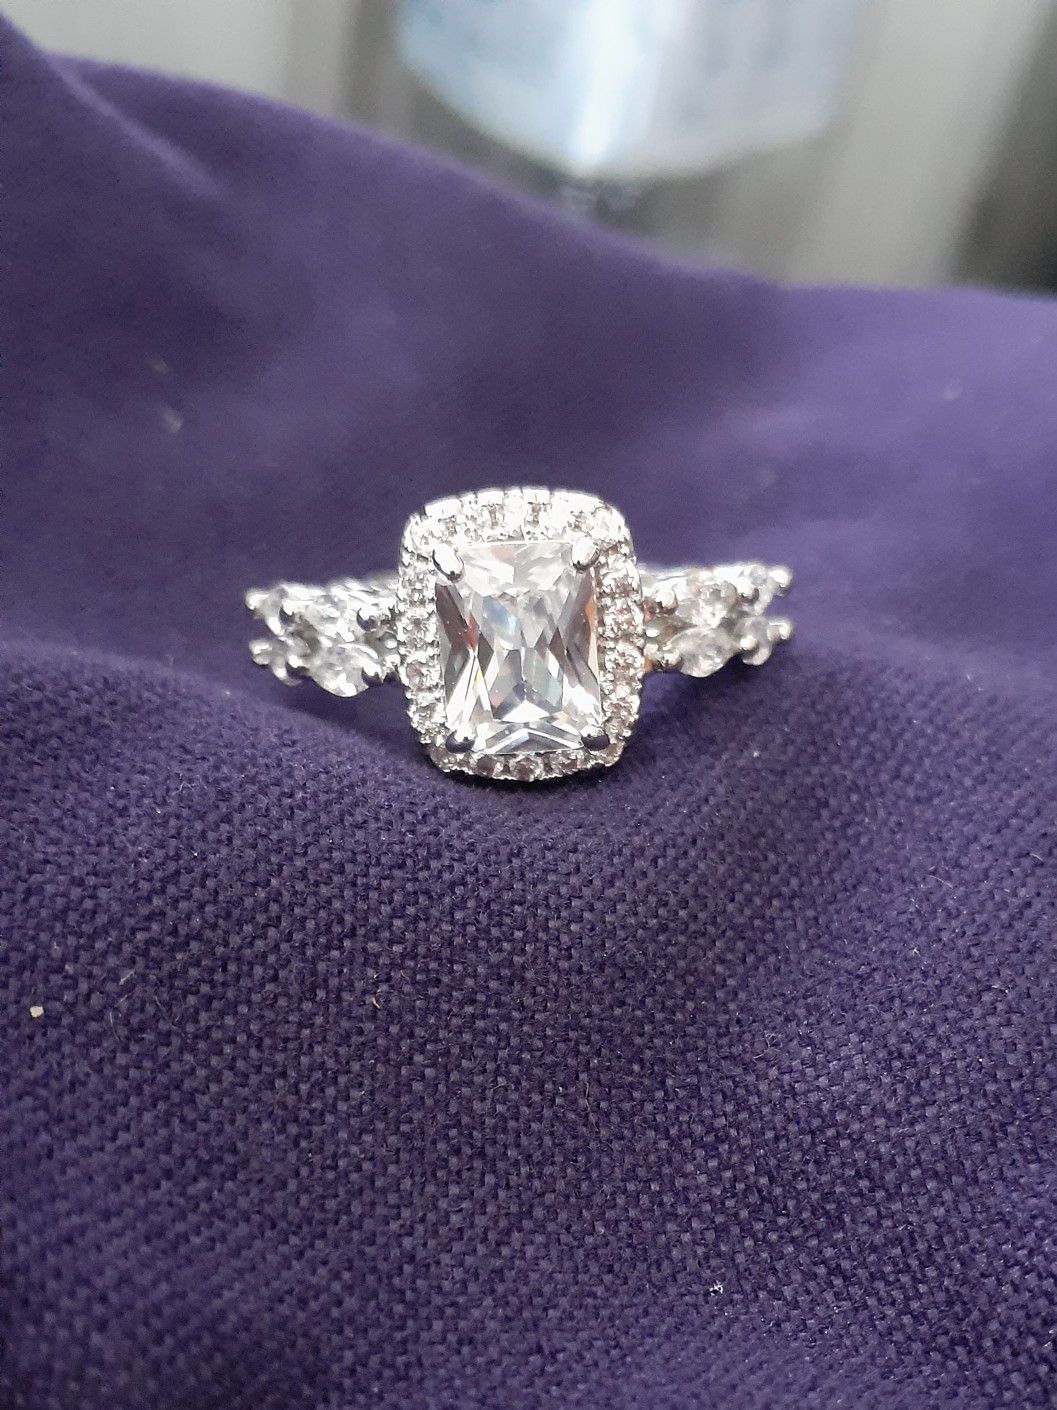 3 carat cz .925 Sterling silver diamond engagement wedding fashion ring, brand new!